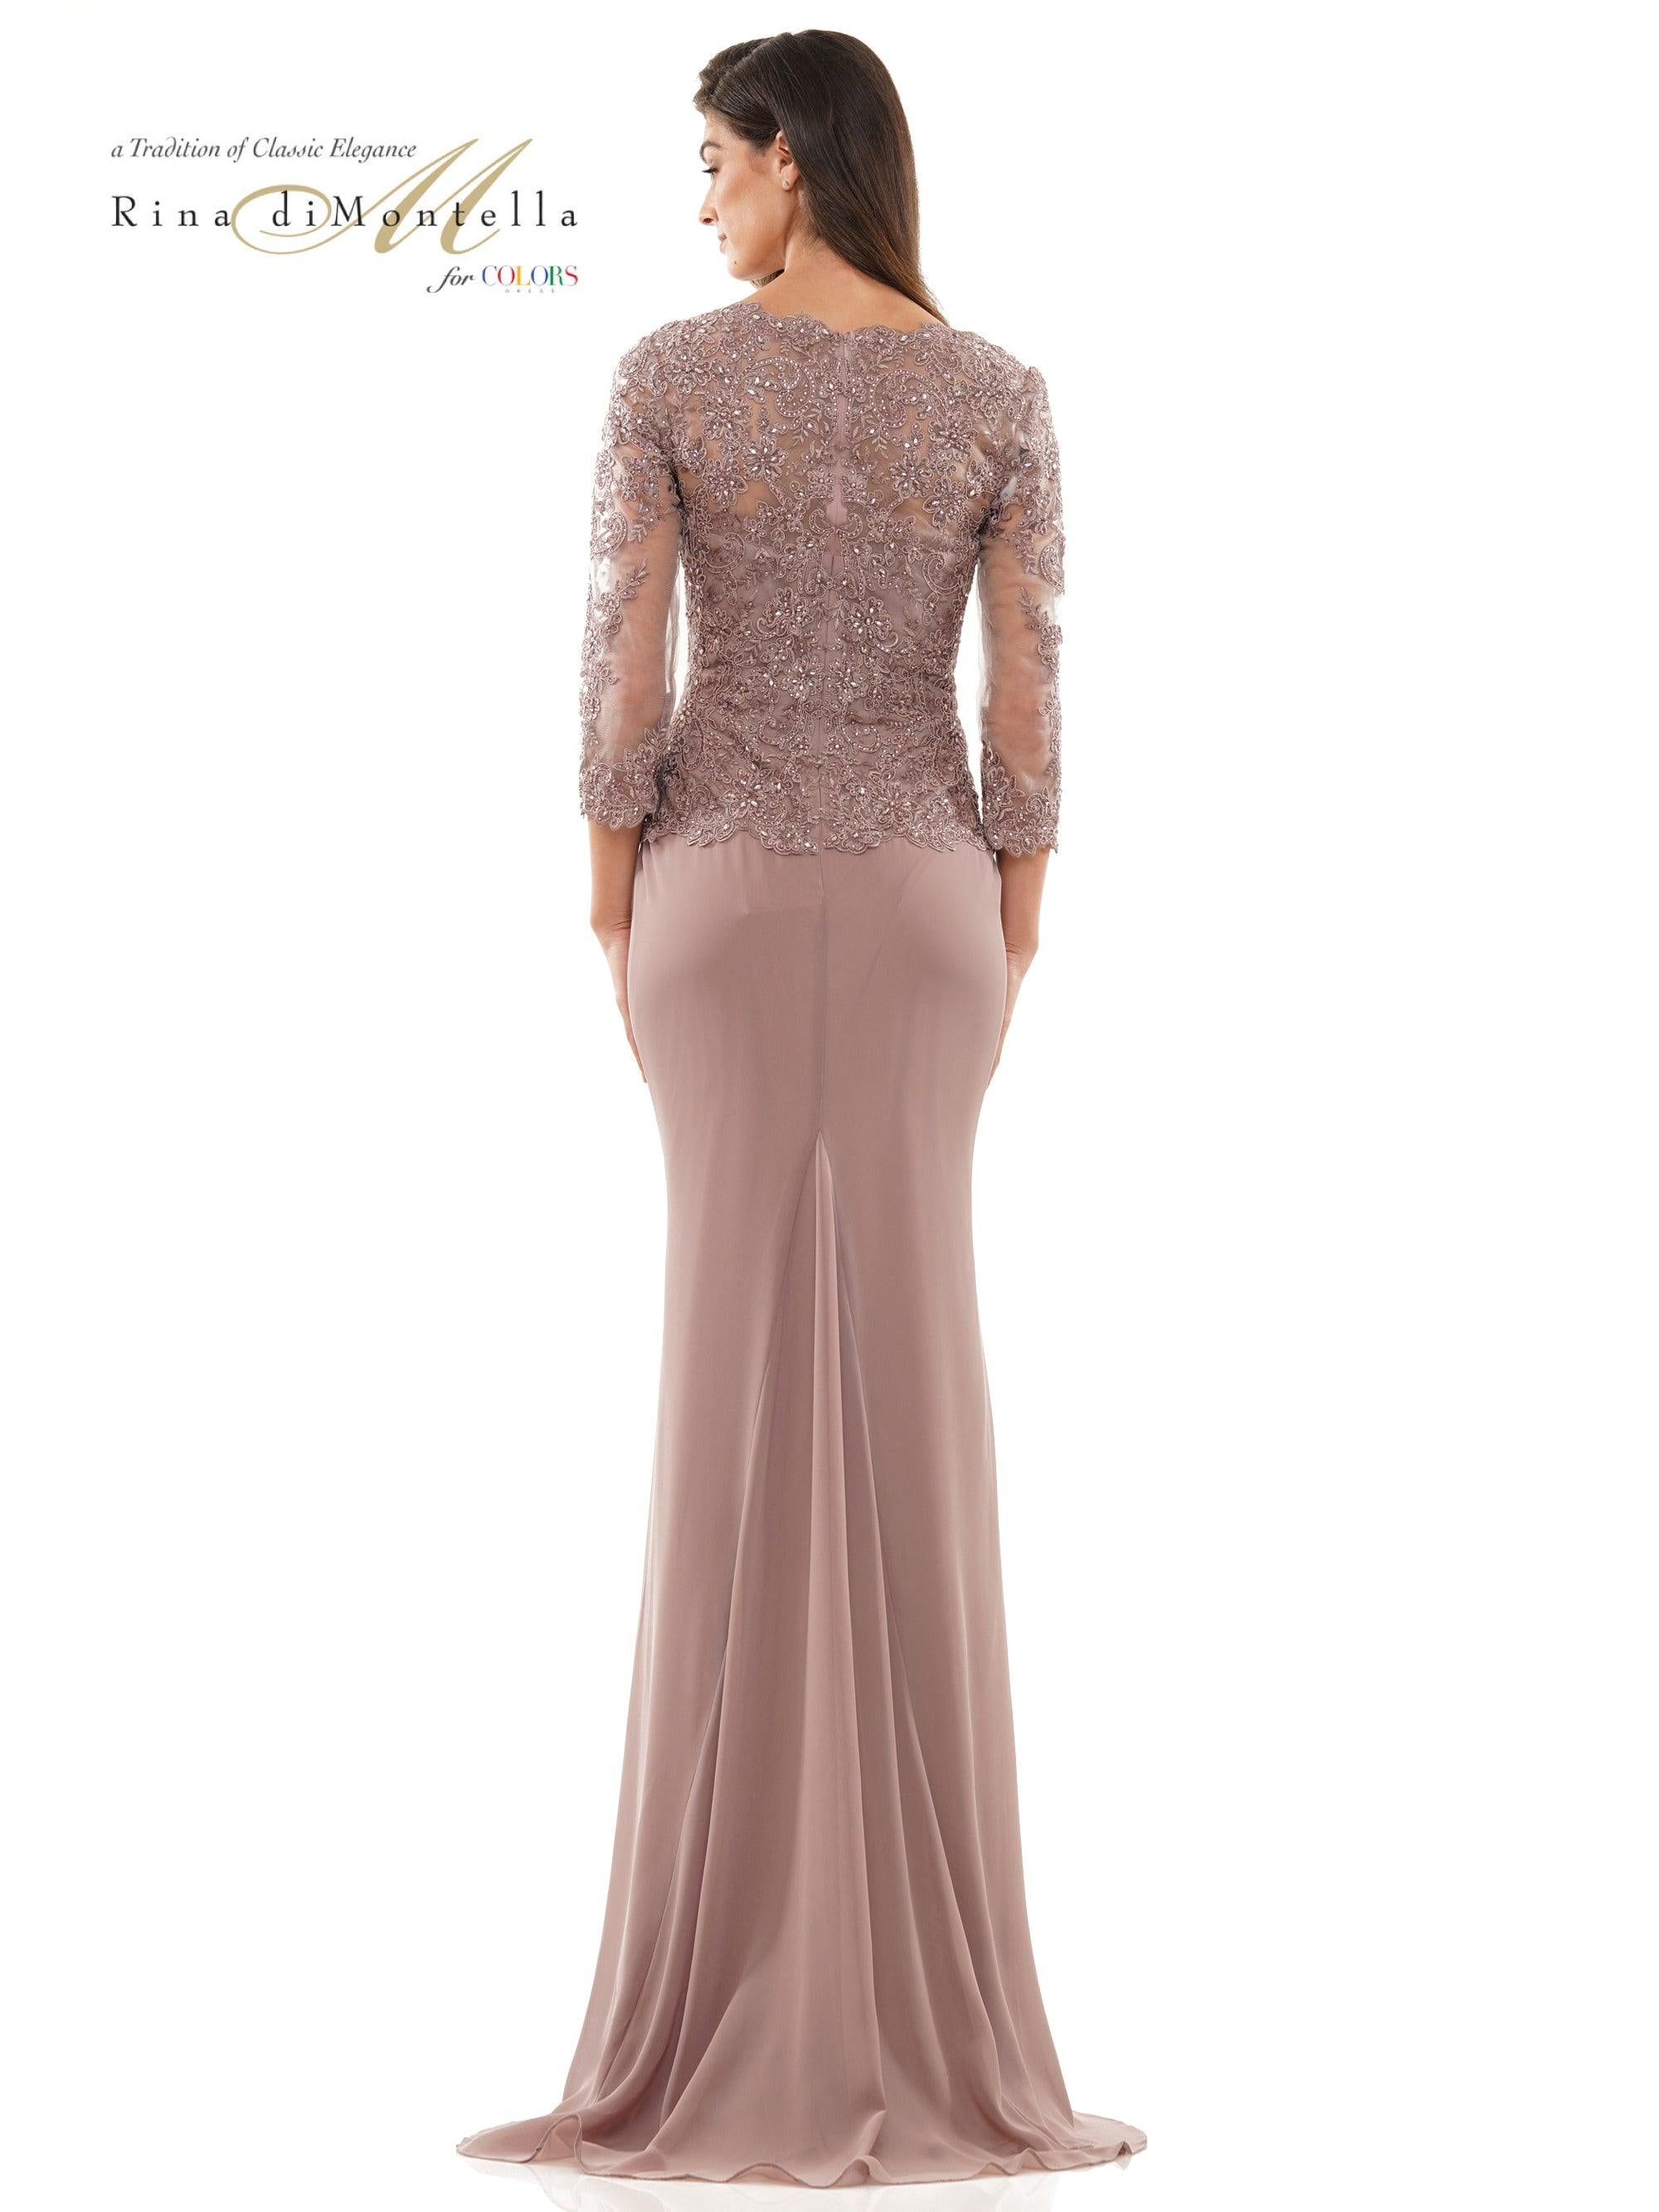 Rina di Montella Long Formal Chiffon Dress 2744 - The Dress Outlet